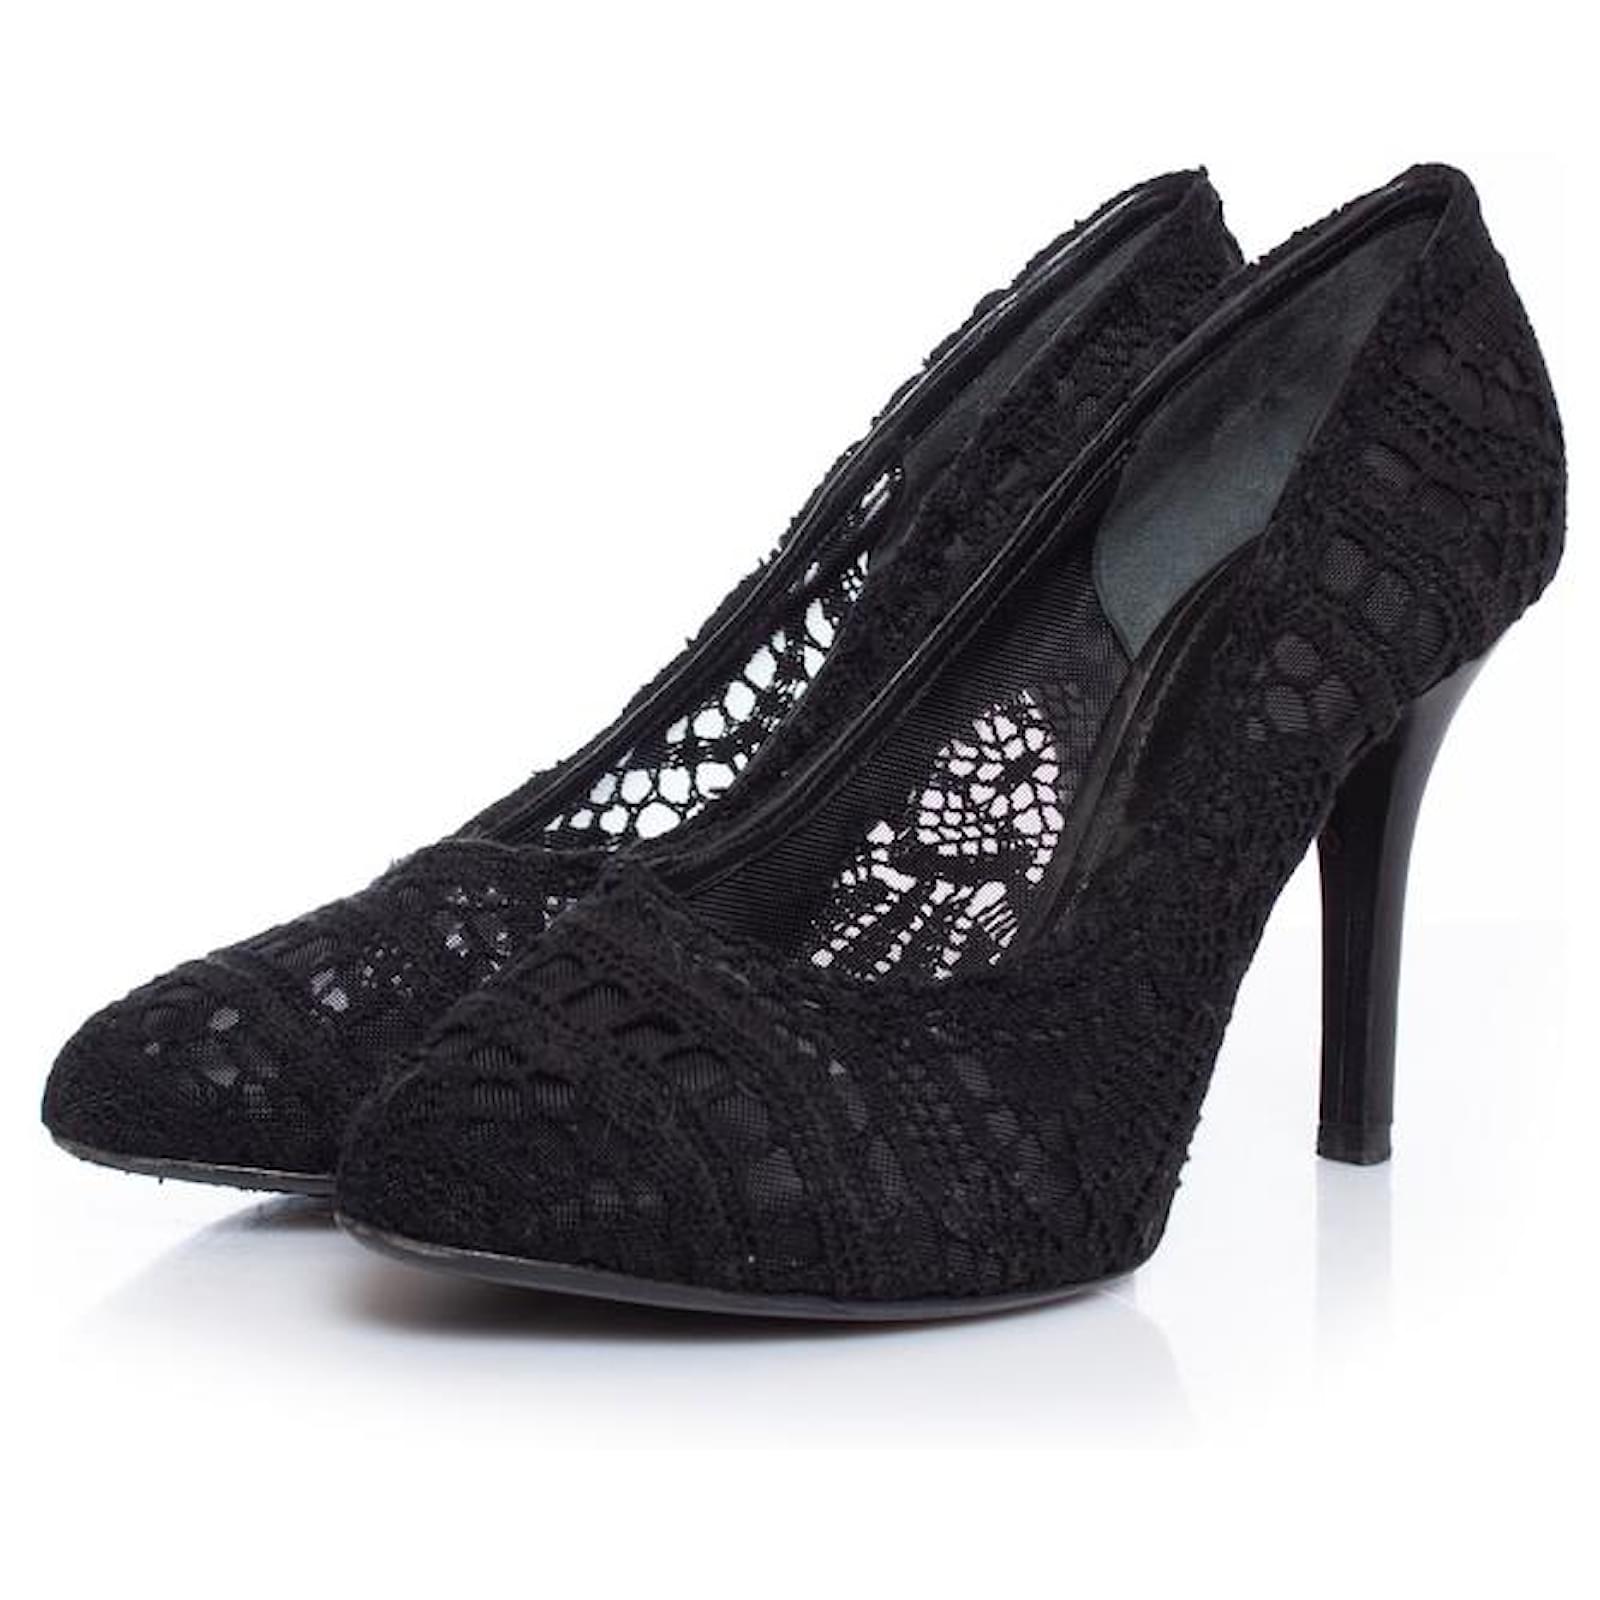 Awe I Want Black Suede Lace-Up Heels | Fashion heels, Heels, Stiletto heels